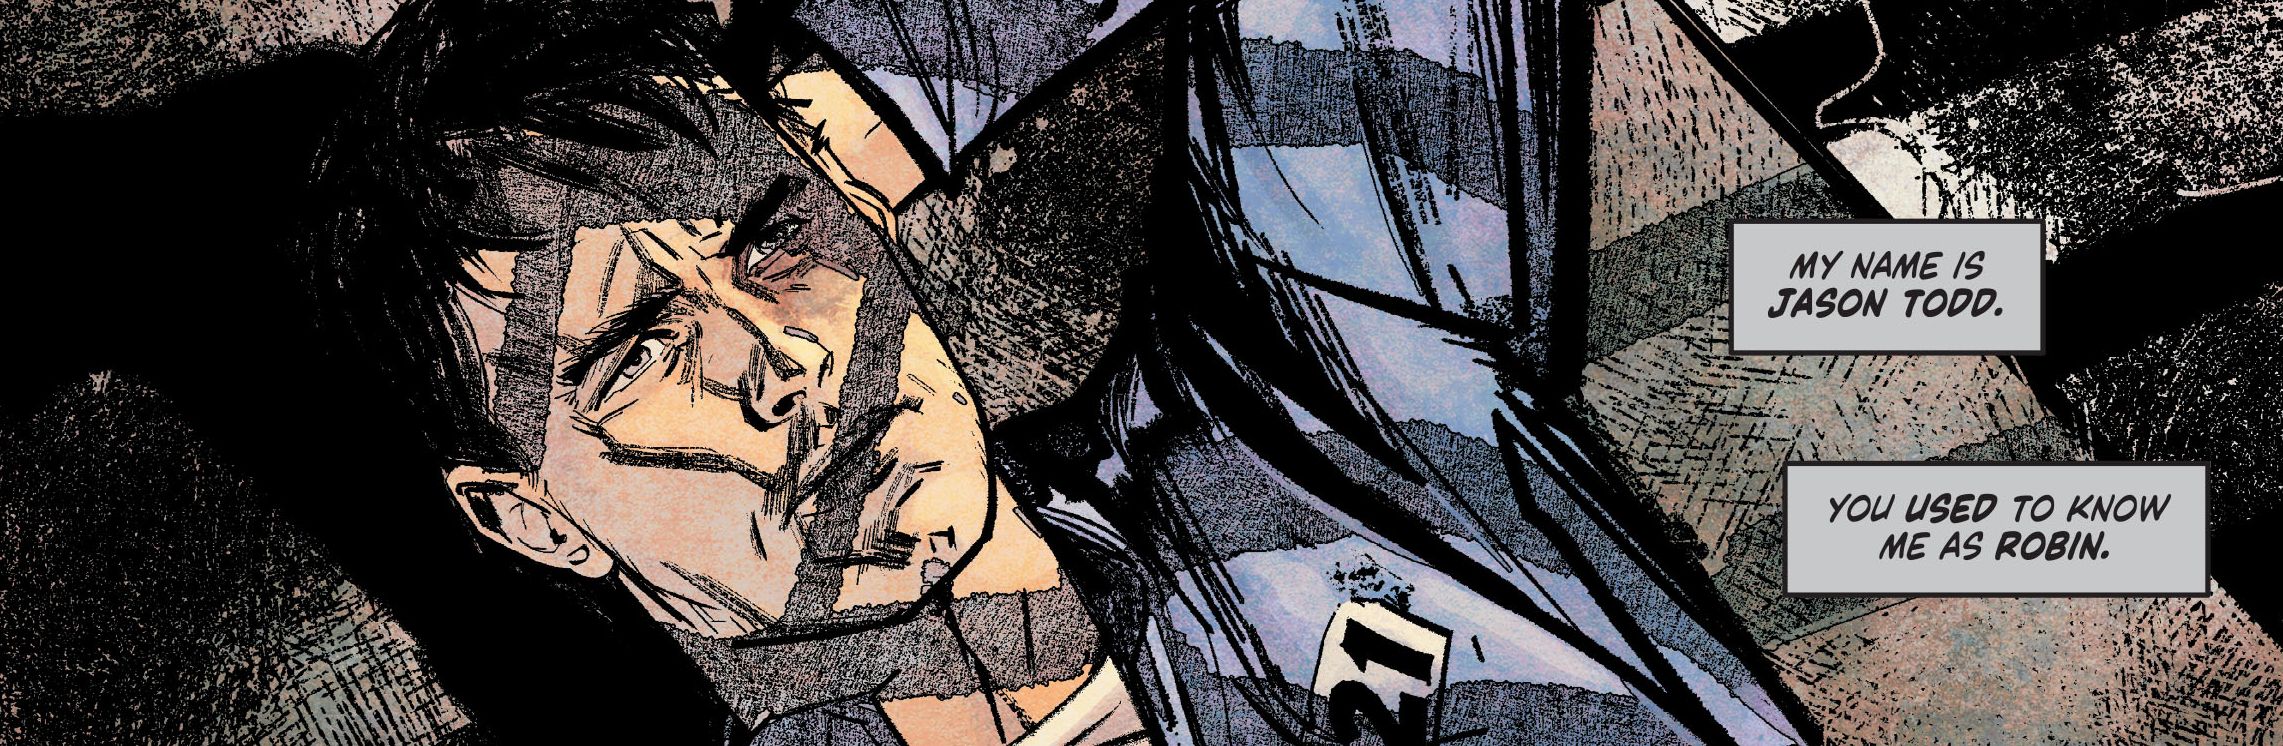 Jason Todd in Jail in Suicide Squad: Get Joker #1